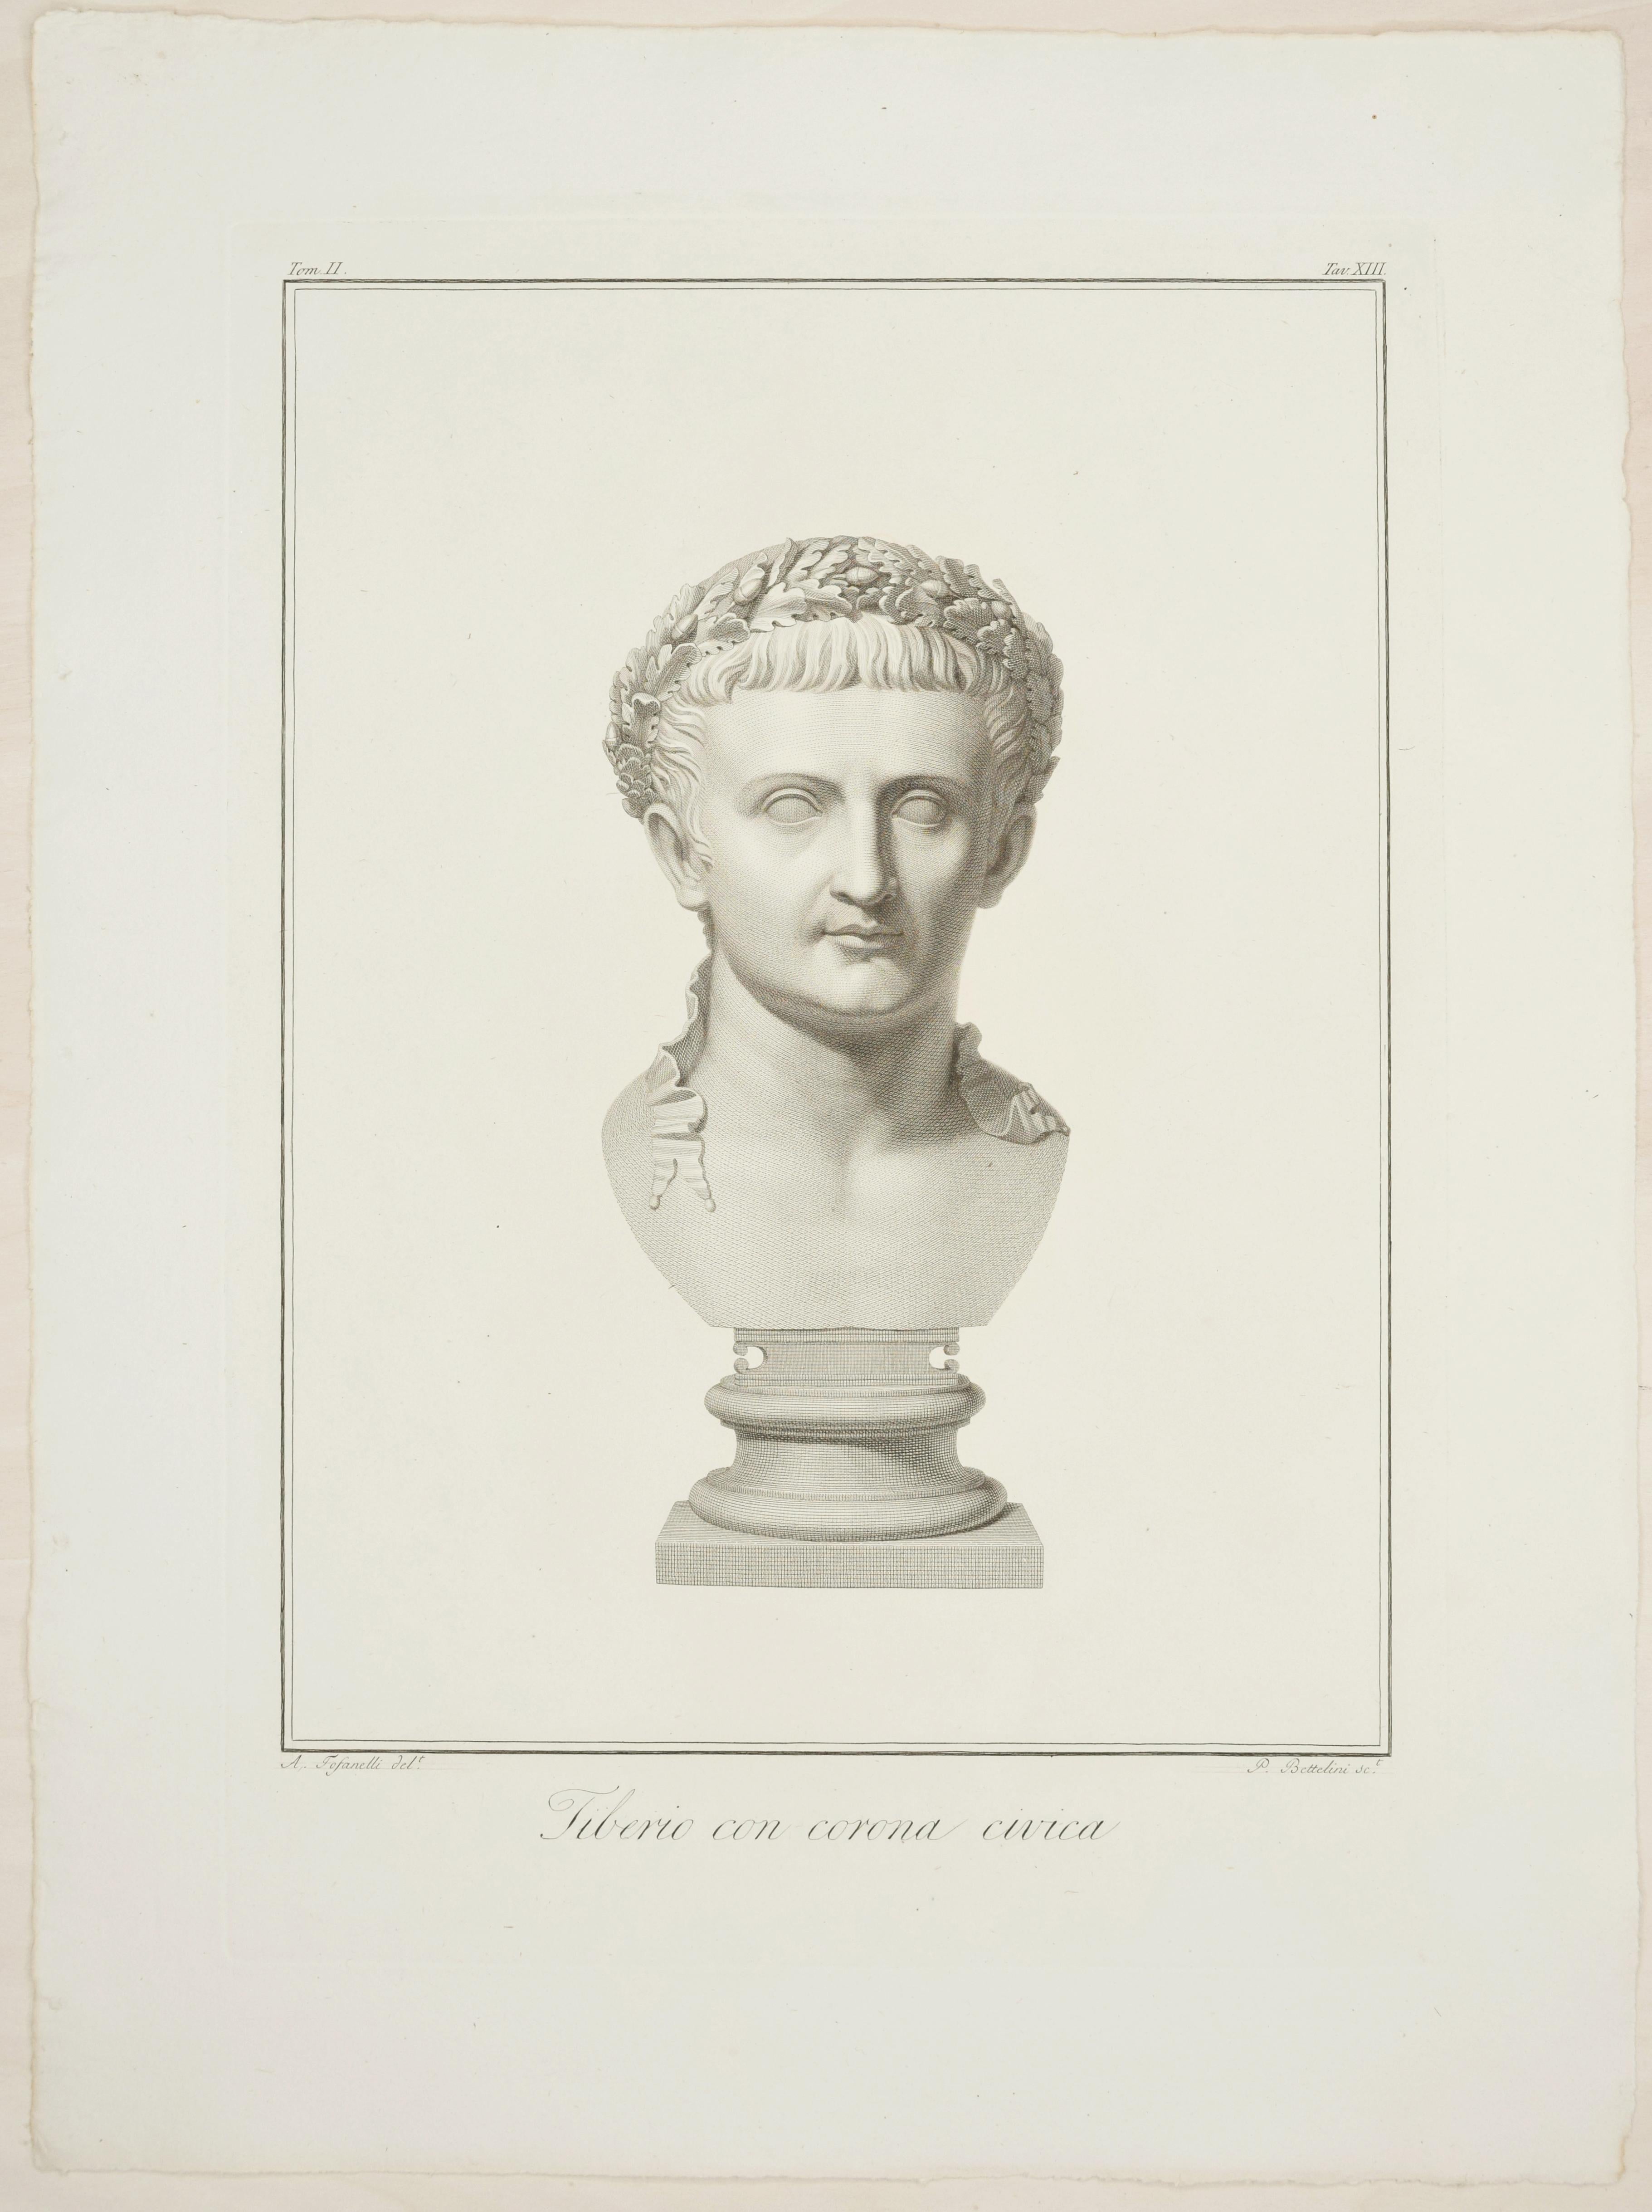 Pietro Fontana Portrait Print - Bust of Tiberius - Original Etching by P. Fontana After A. Tofanelli